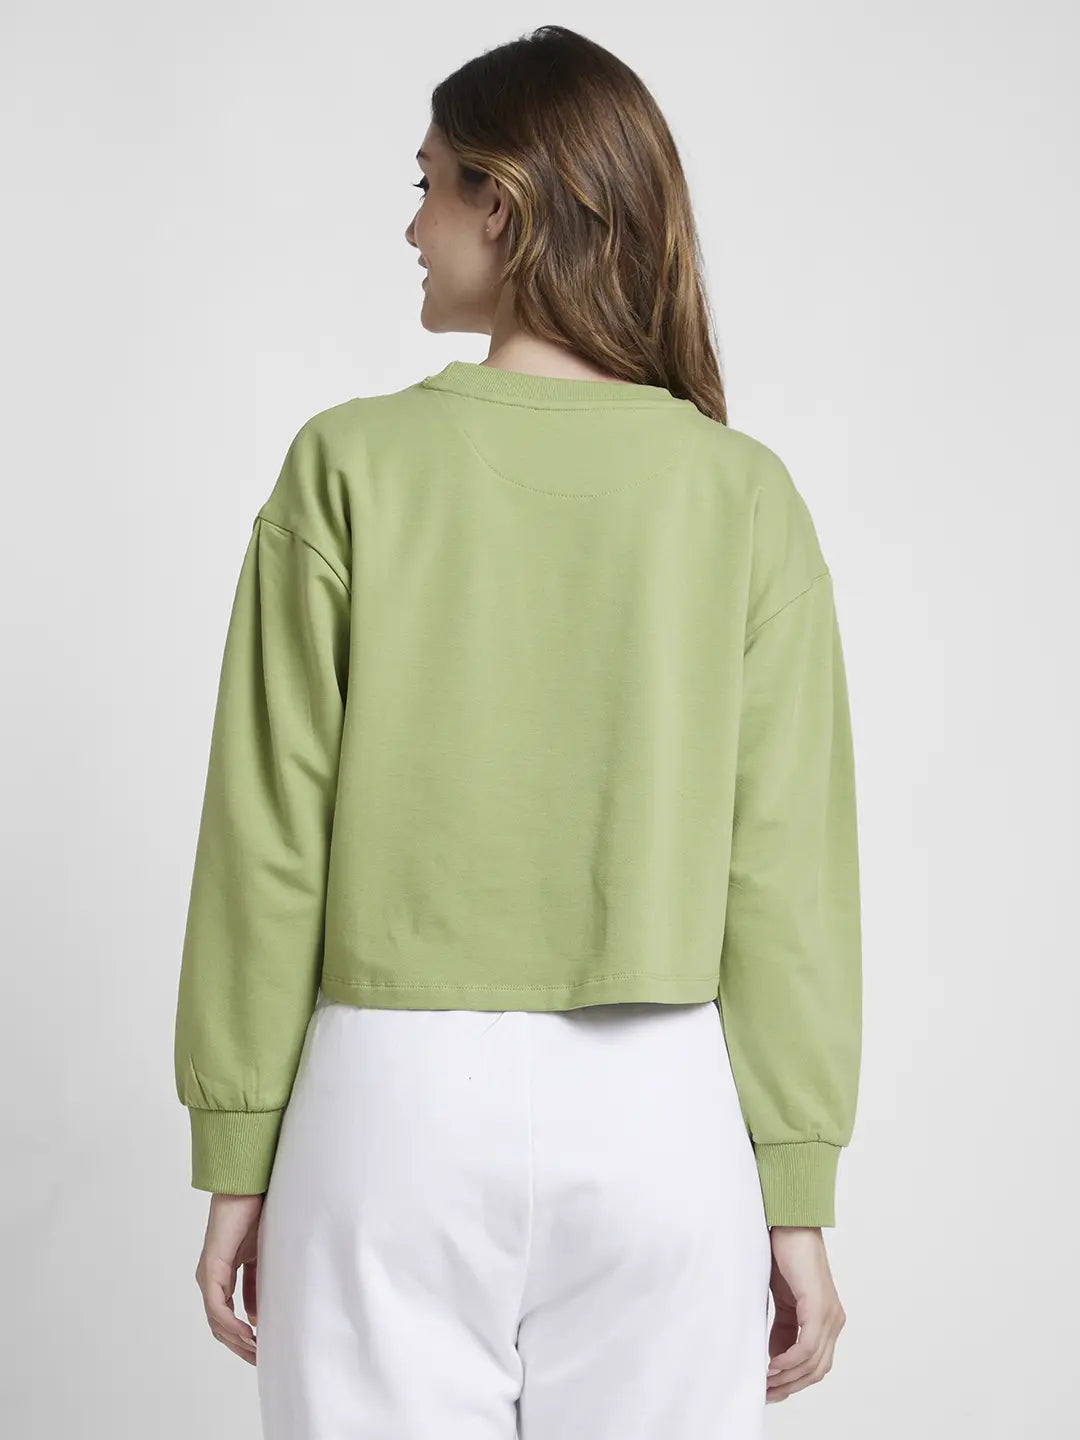 Spykar Women Mindful Mauve Blended Boxy Fit Round Neck Printed Crop Sweatshirt